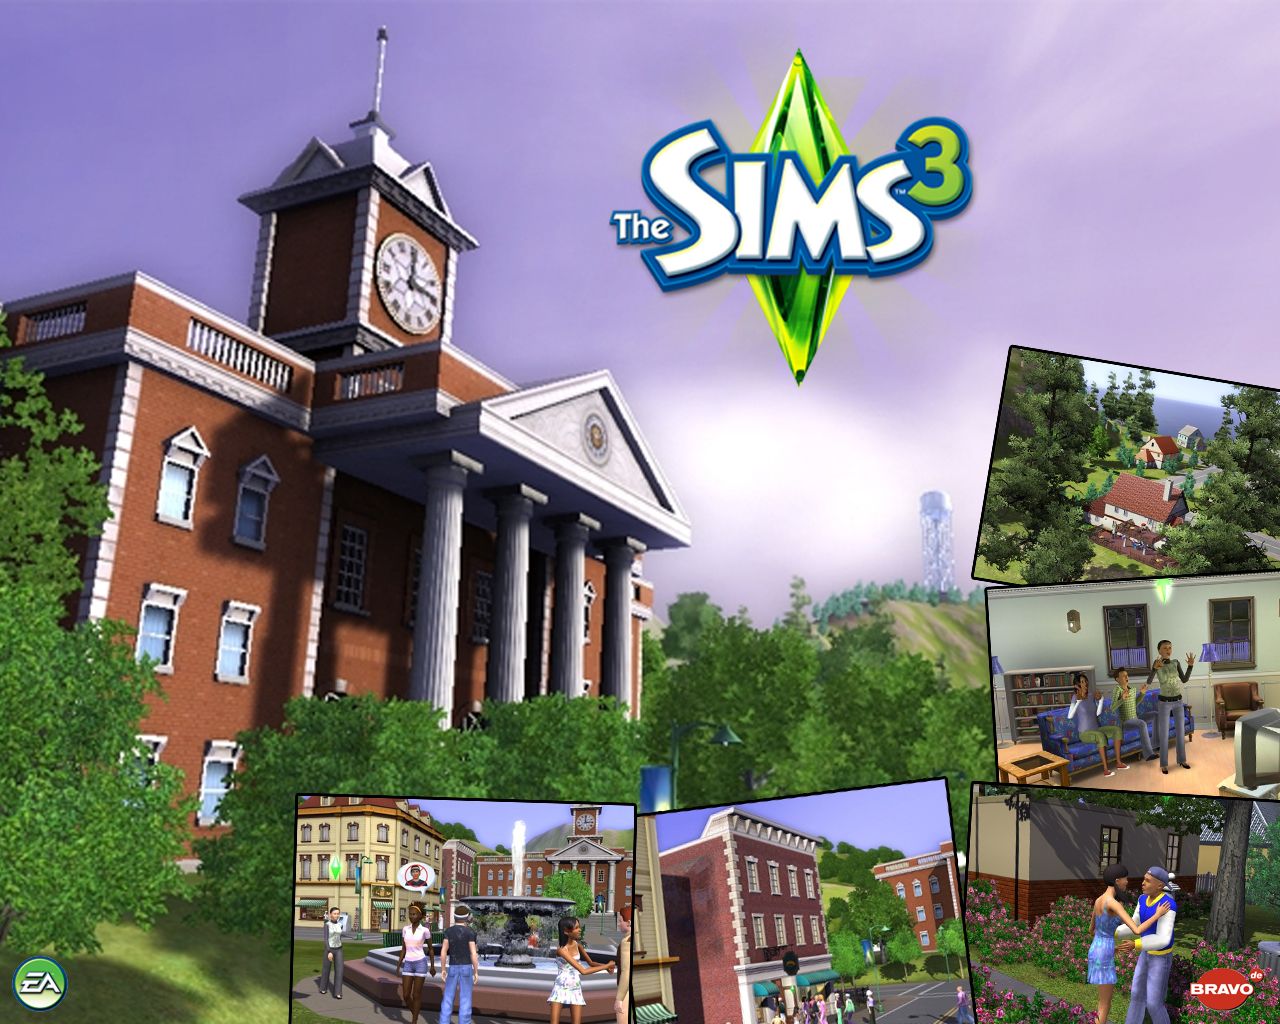 sims3 wallpaper03 1280x1024 - The Sims 3 [Multilenguaje]